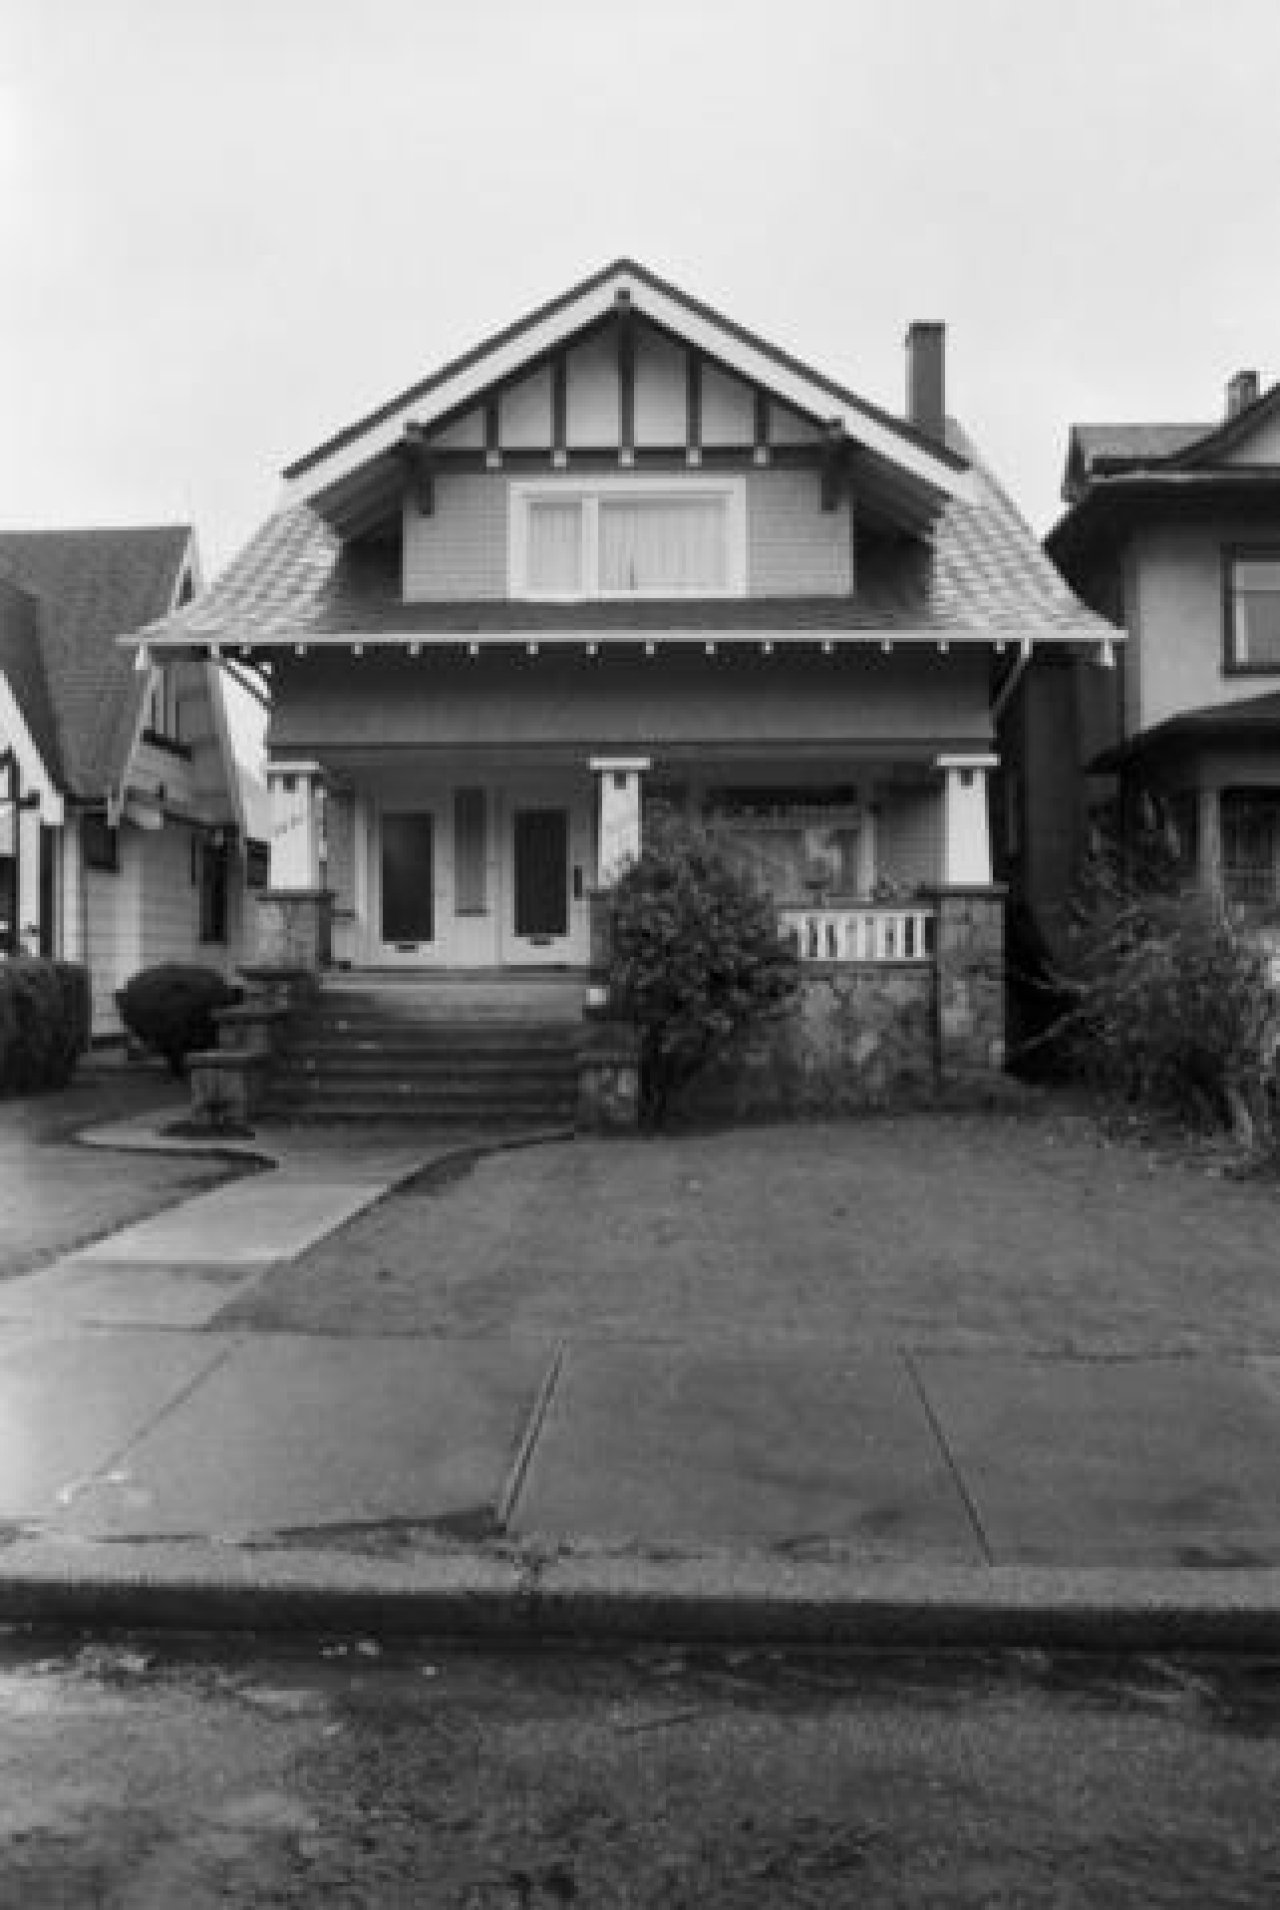 3235-3237 West 2nd Avenue c. 1985
Source: City of Vancouver Archives Item : CVA 790-1565 - 3237-3235 West 2nd Avenue